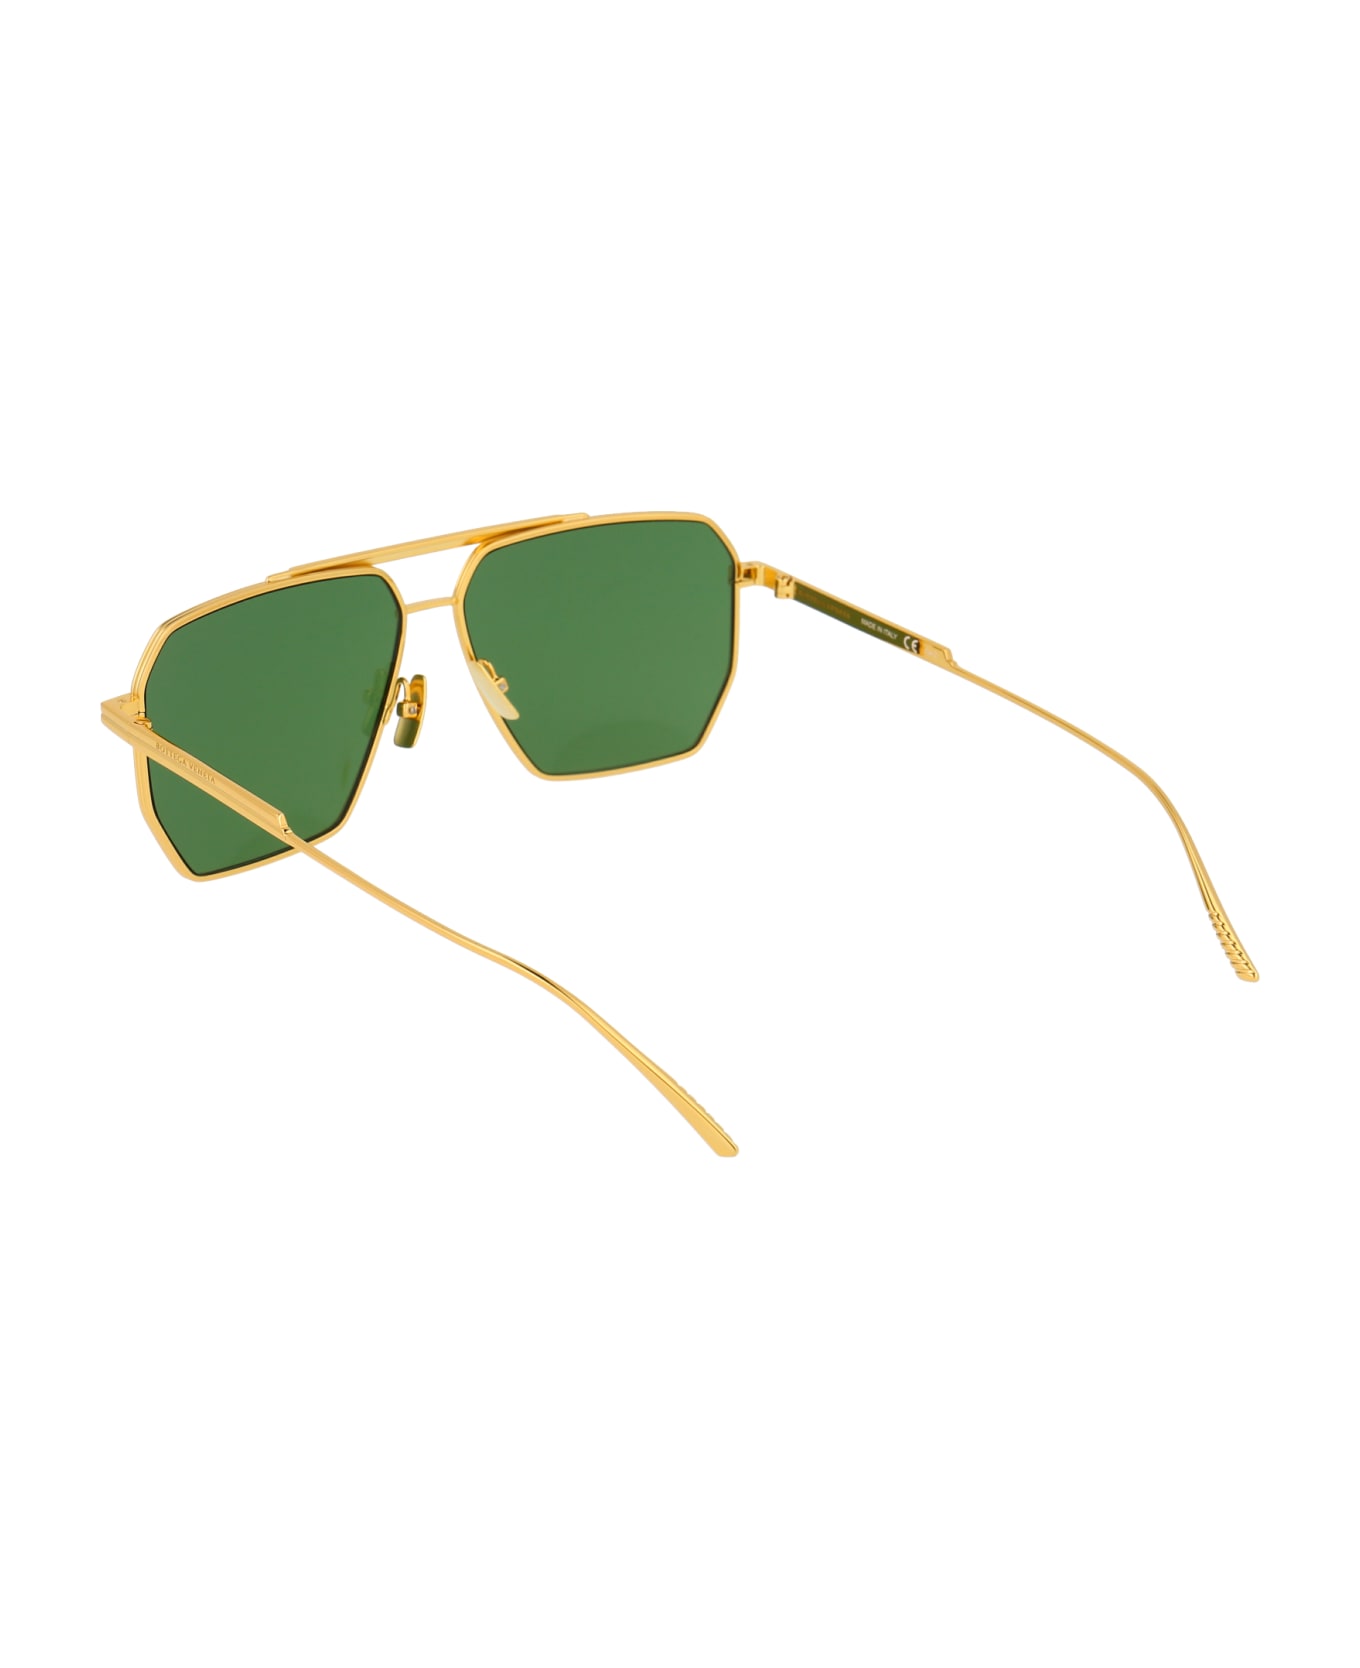 Bottega Veneta Eyewear Bv1012s Sunglasses - 004 GOLD GOLD GREEN